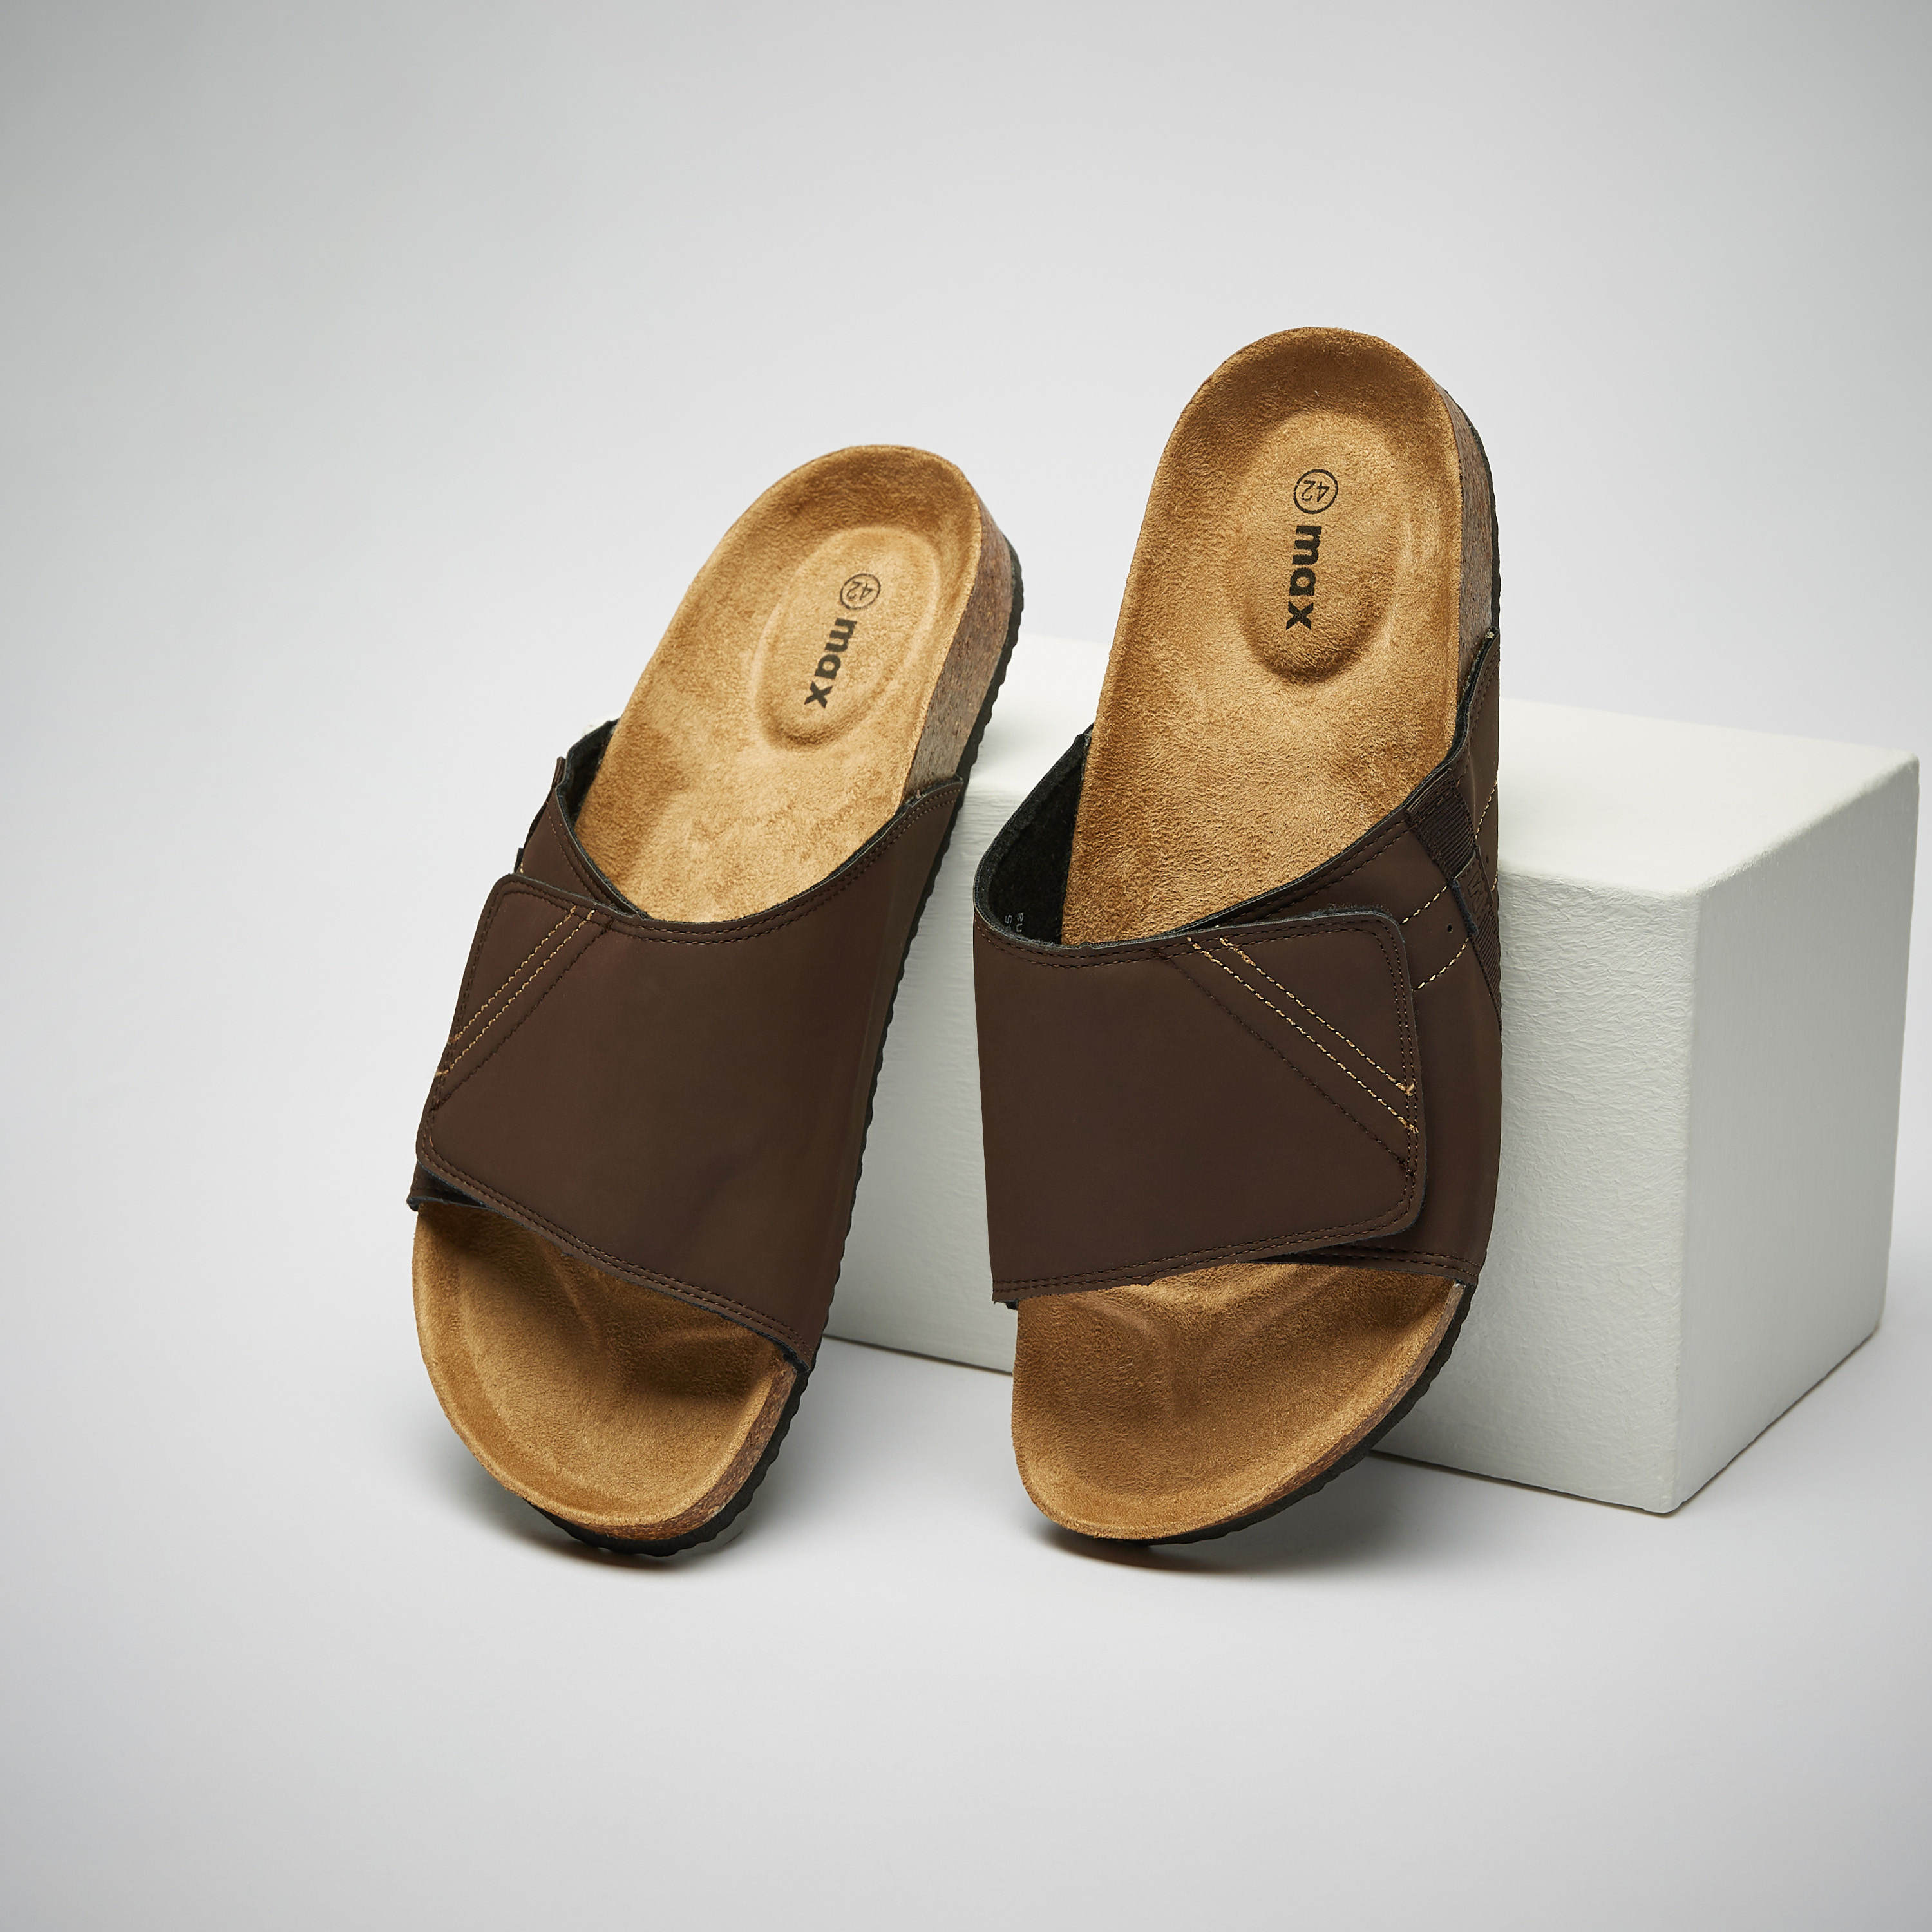 Buy Jewel sandals Online in Dubai & the UAE|Kiabi